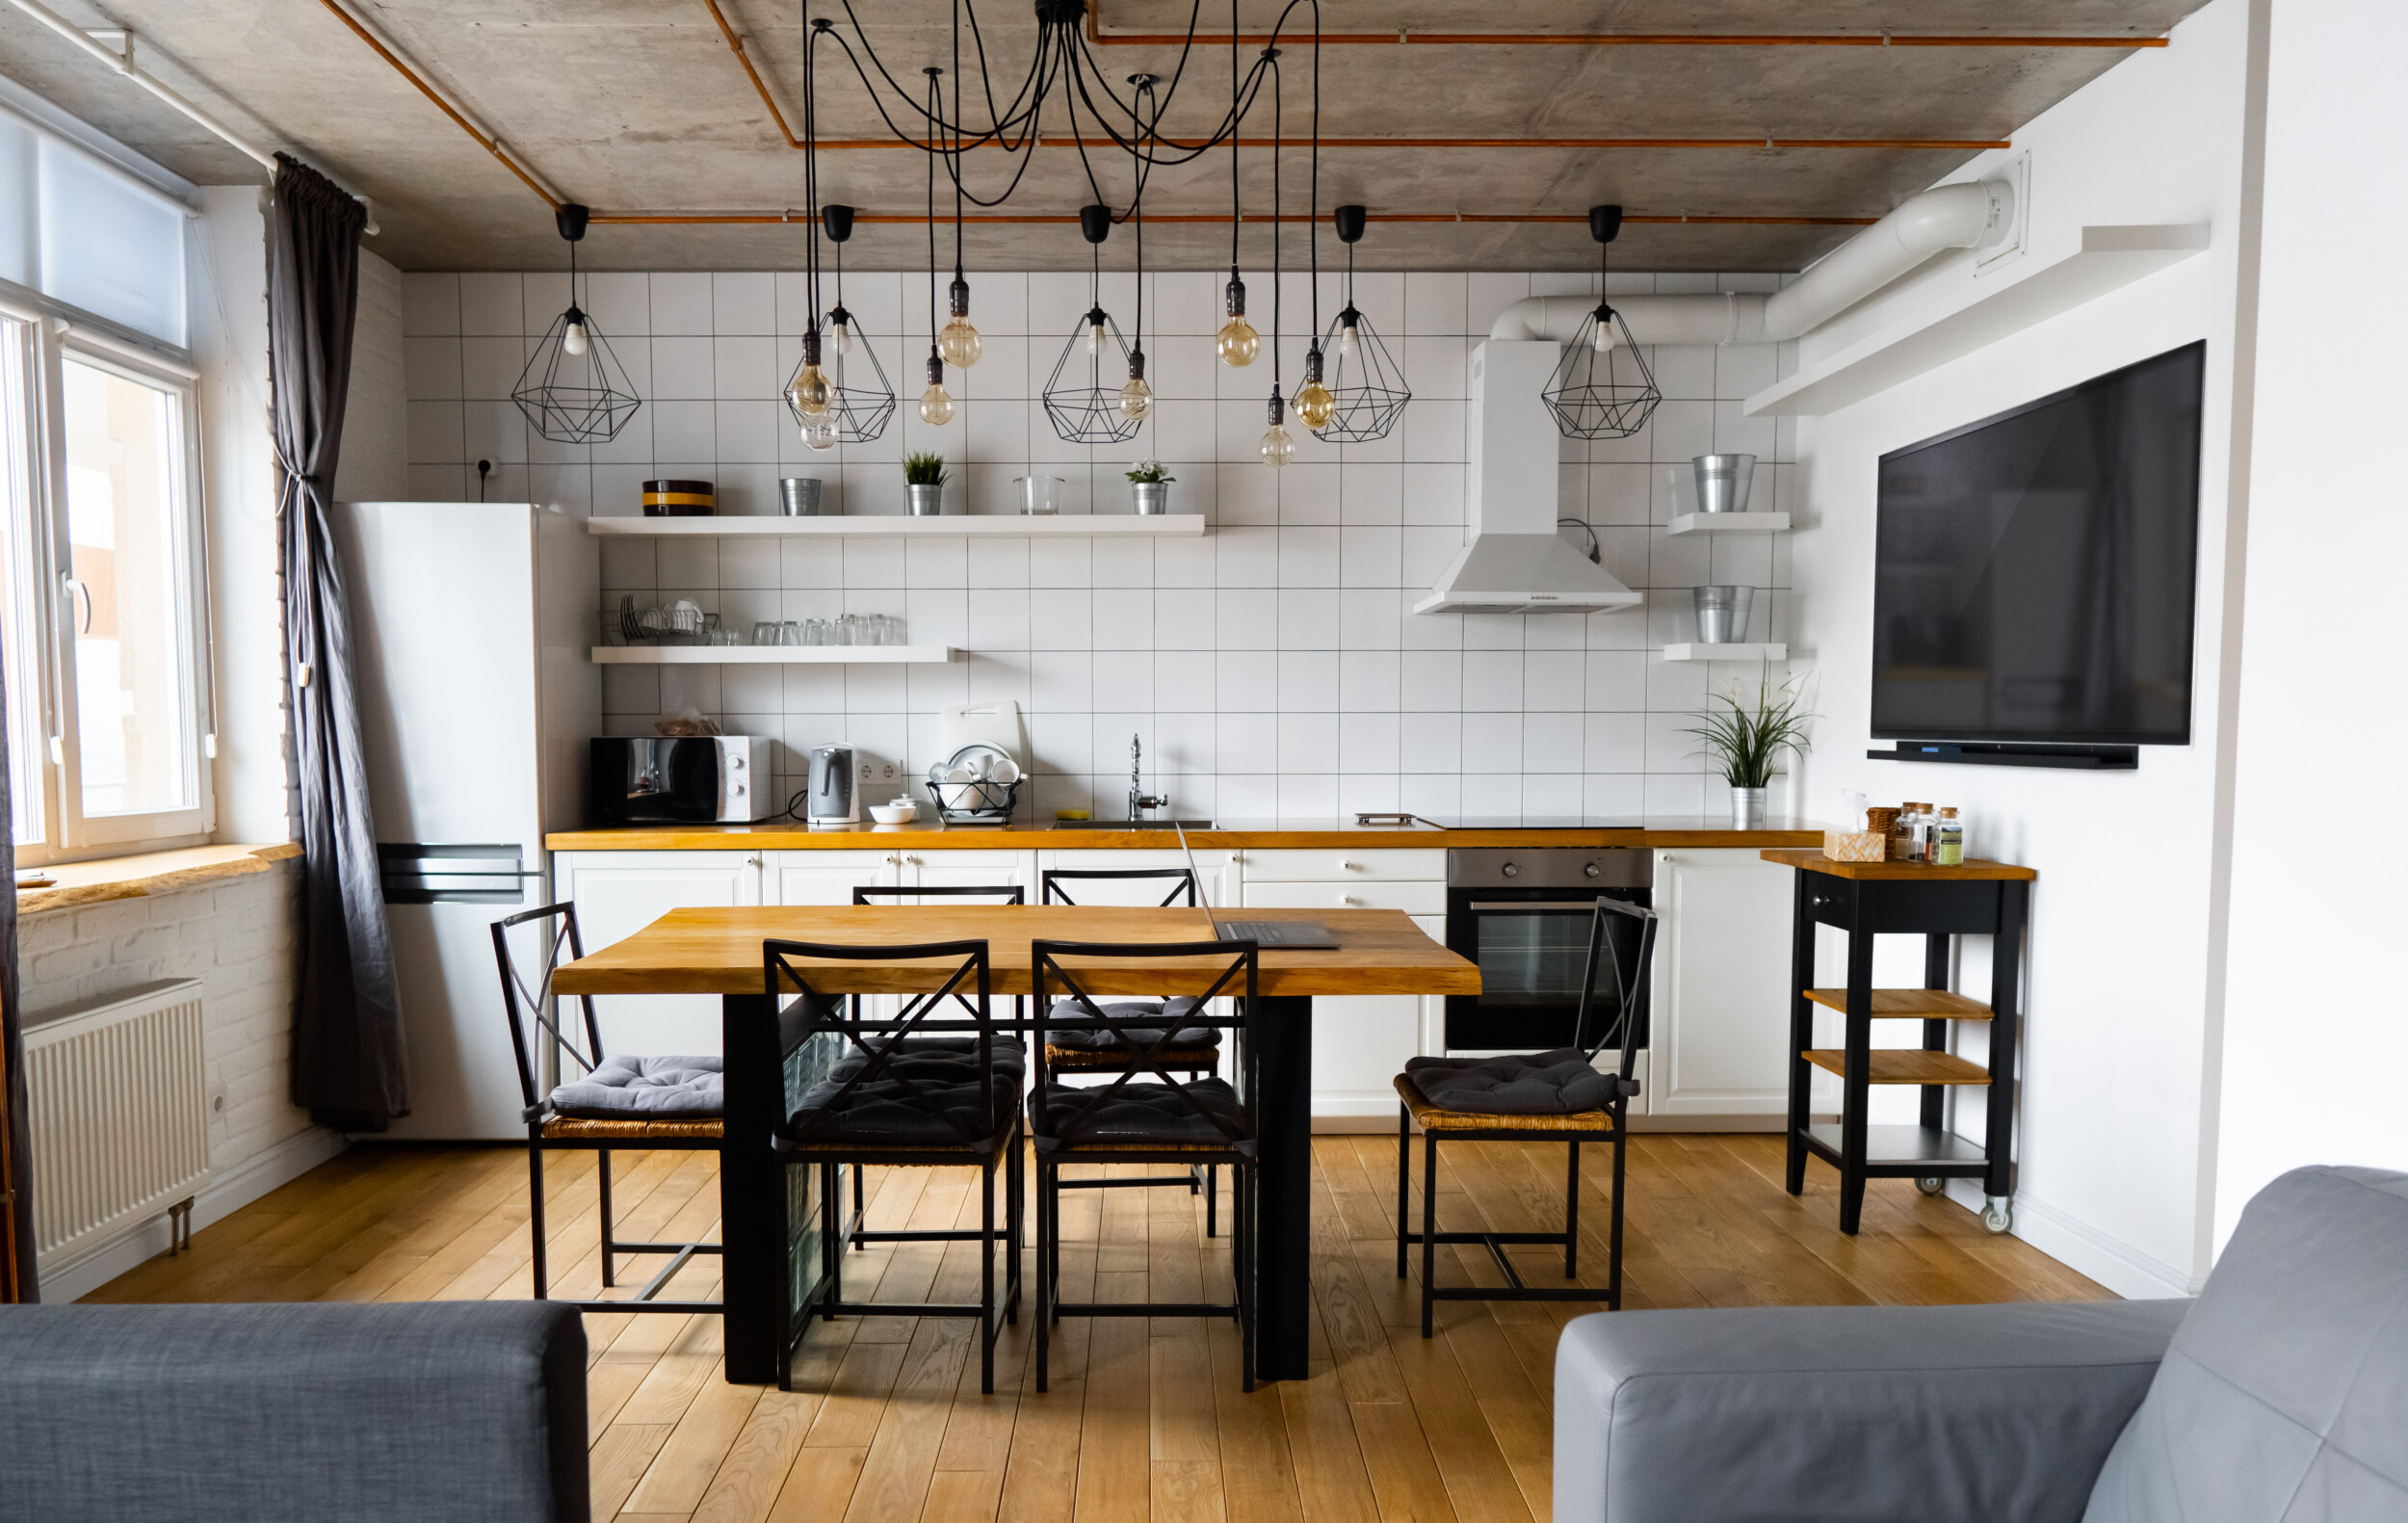 Master Modern Farmhouse Kitchen Decor With These Ideas - Décor Aid